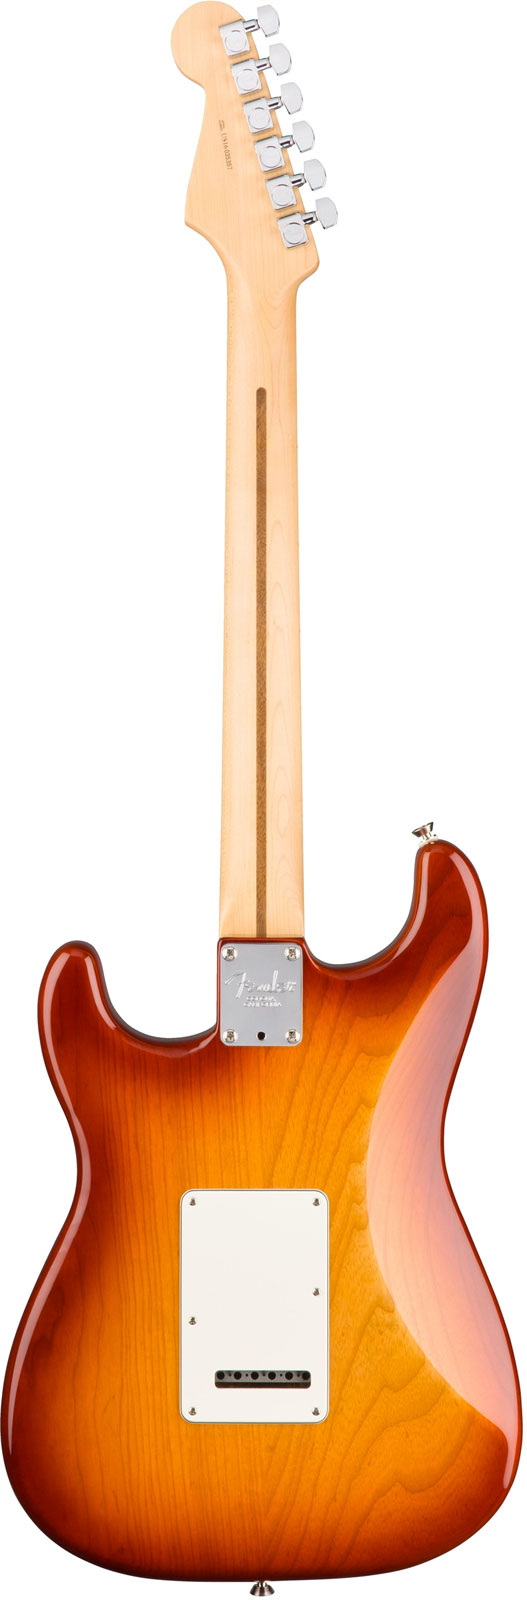 Fender Strat American Professional 2017 3s Usa Mn - Sienna Sunburst - Str shape electric guitar - Variation 2